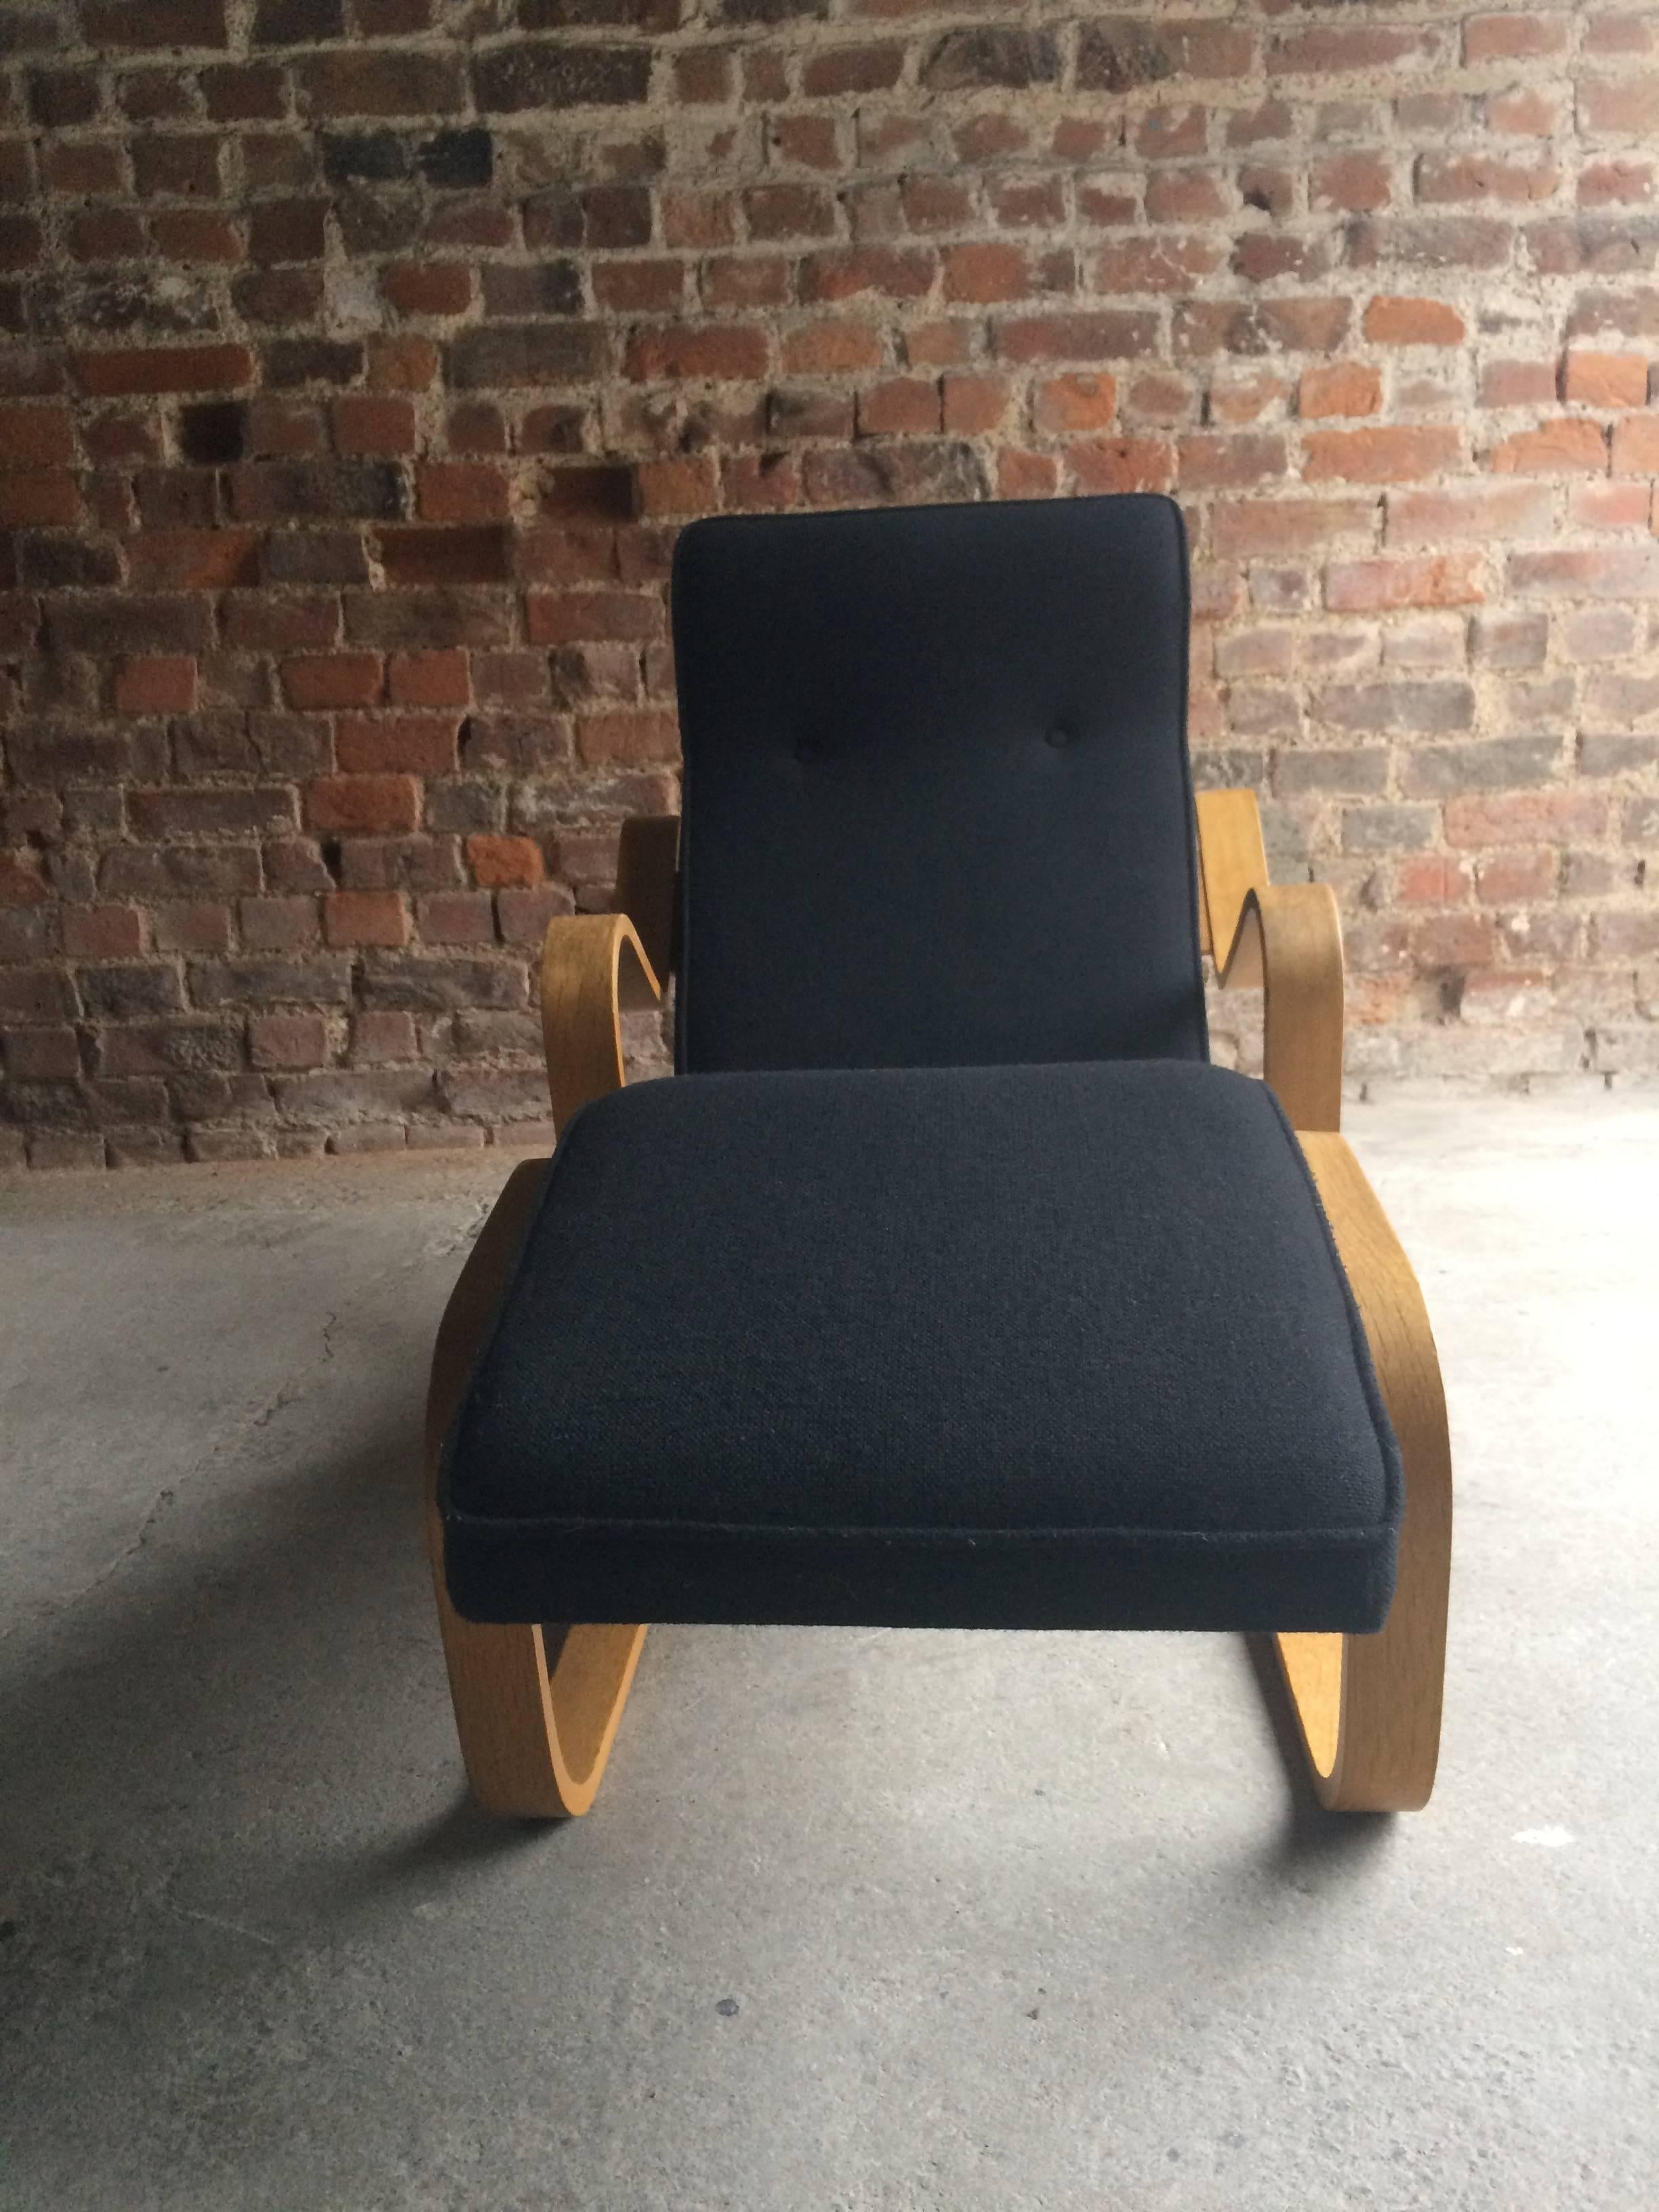 Birch Marcel Breuer Long Chair Chaise Longue Black Midcentury 1970s Bauhaus No. 3